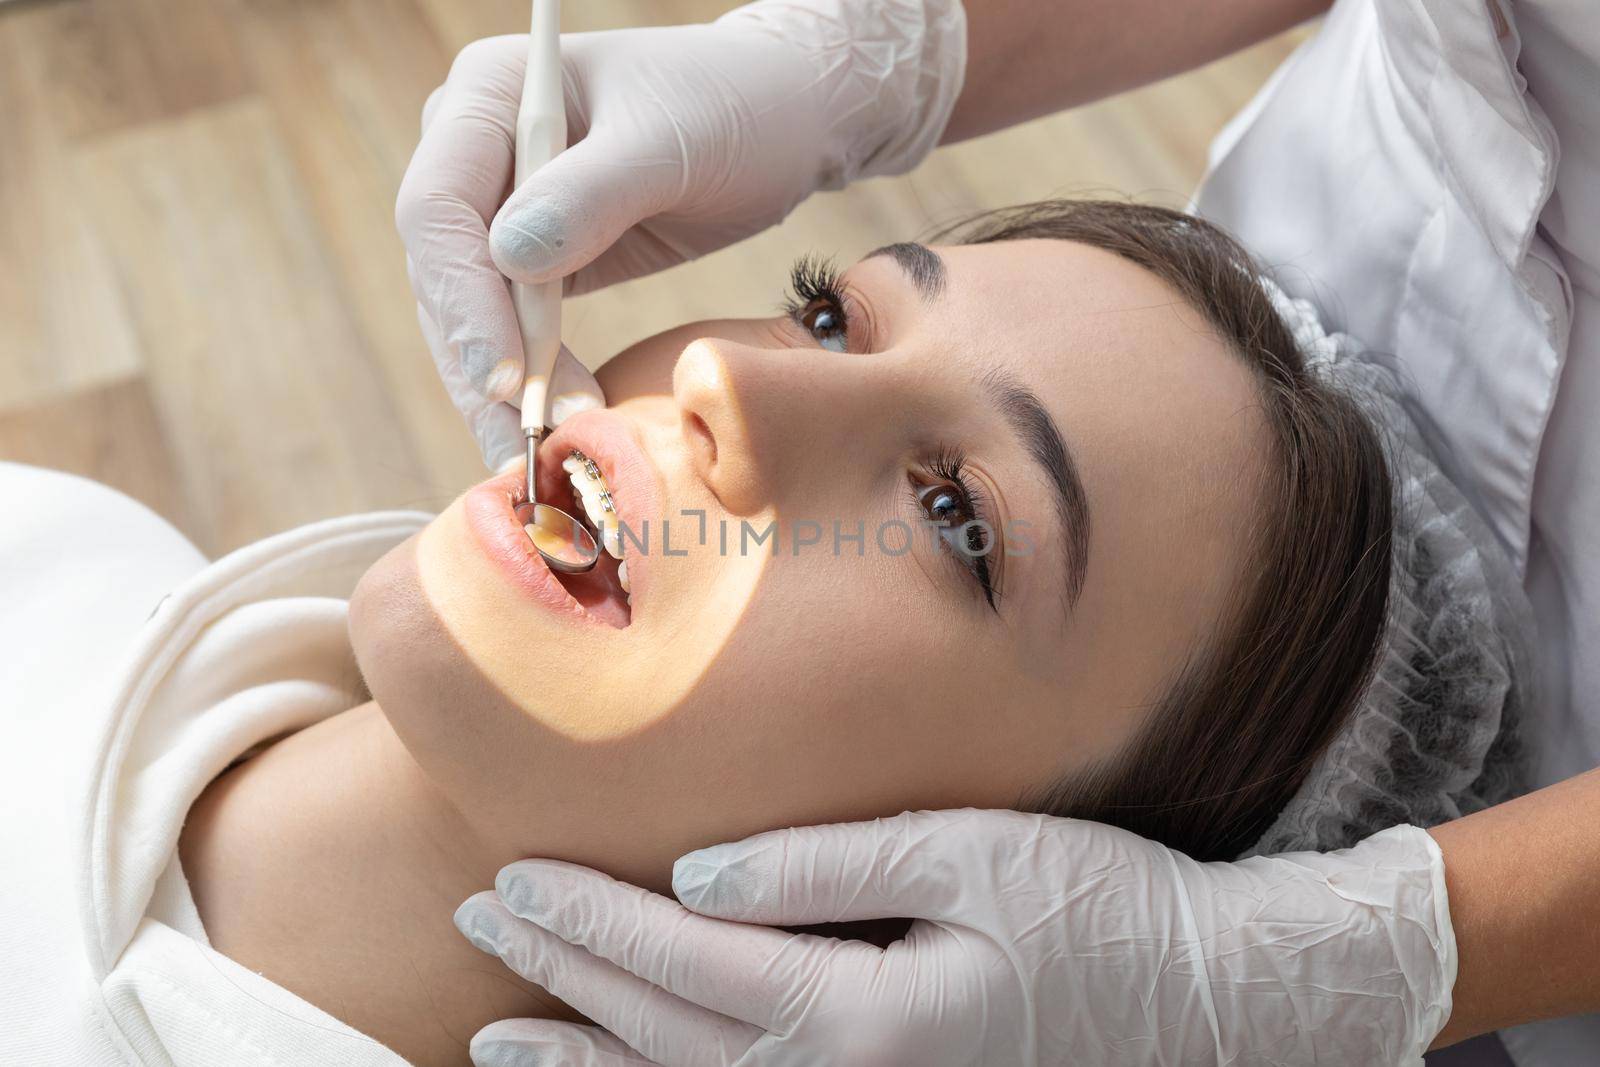 Dentist examining patient teeth with mirror in dentist clinic. Having dental checkup